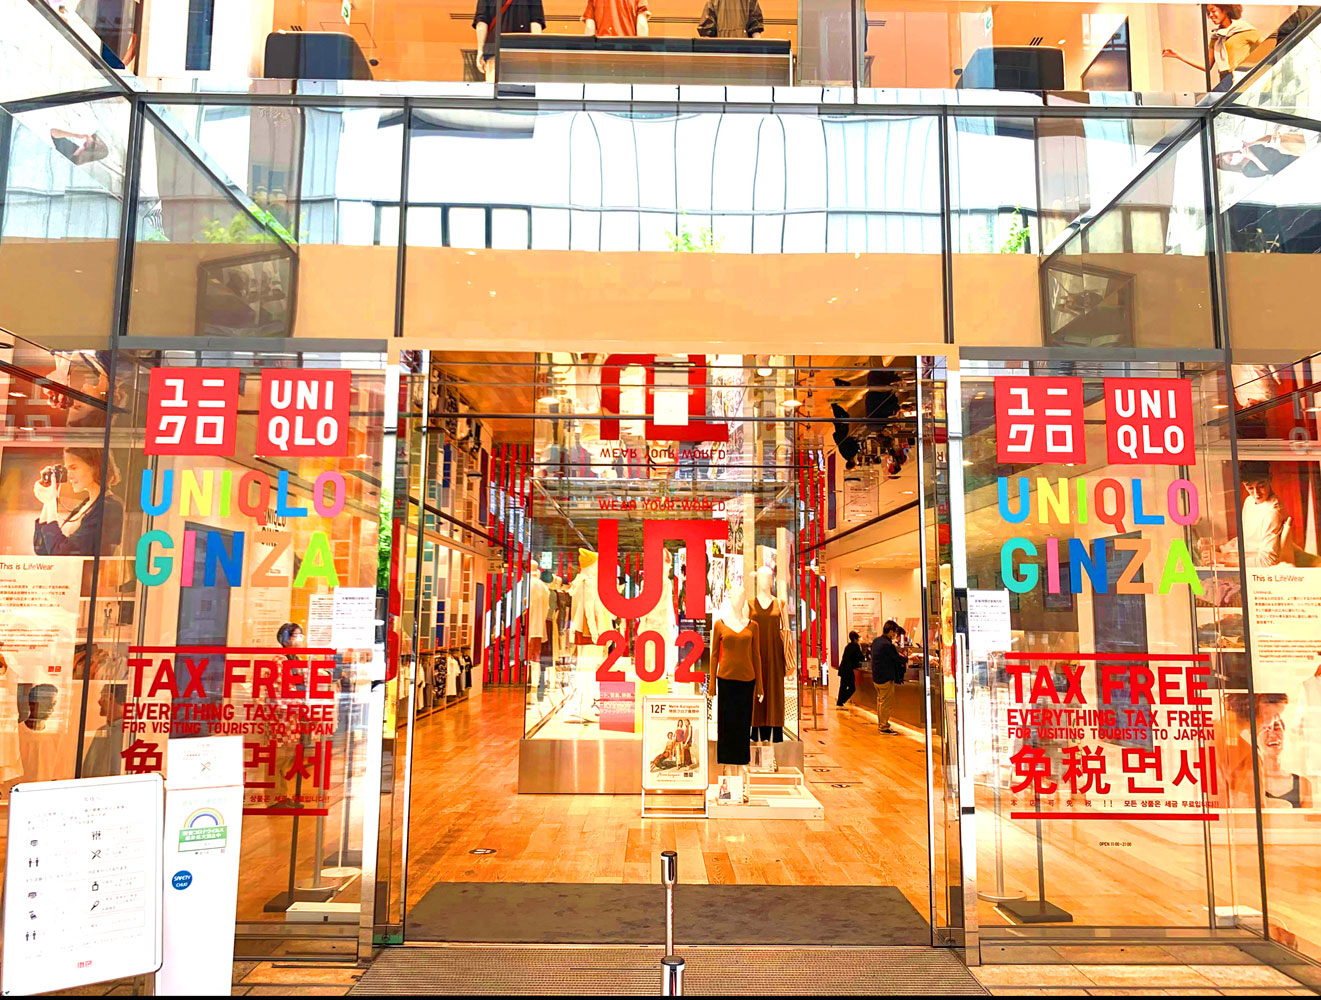 「UNIQLO TOKYO」と共にユニクロの旗艦店として世界にむけた展開をしている「ユニクロ 銀座店」ではワンフロアを「ユニクロUT」で展開している